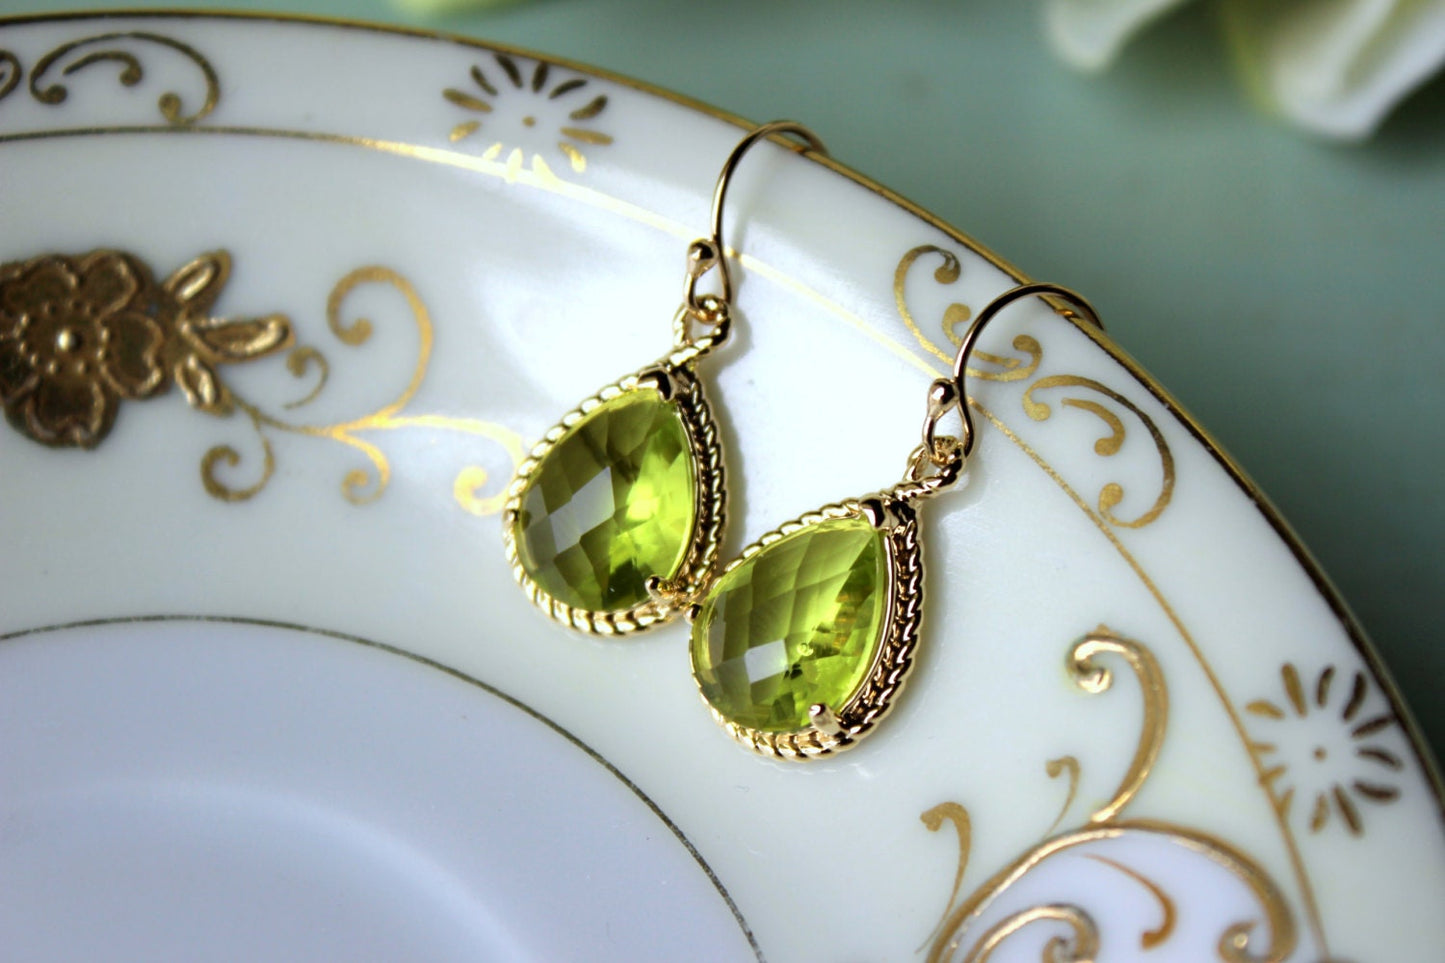 Peridot Earrings Gold Apple Green Jewelry Teardrop Gold Rope Style - Bridesmaid Earrings Wedding Jewelry Bridal Earrings Valentines Day Gift